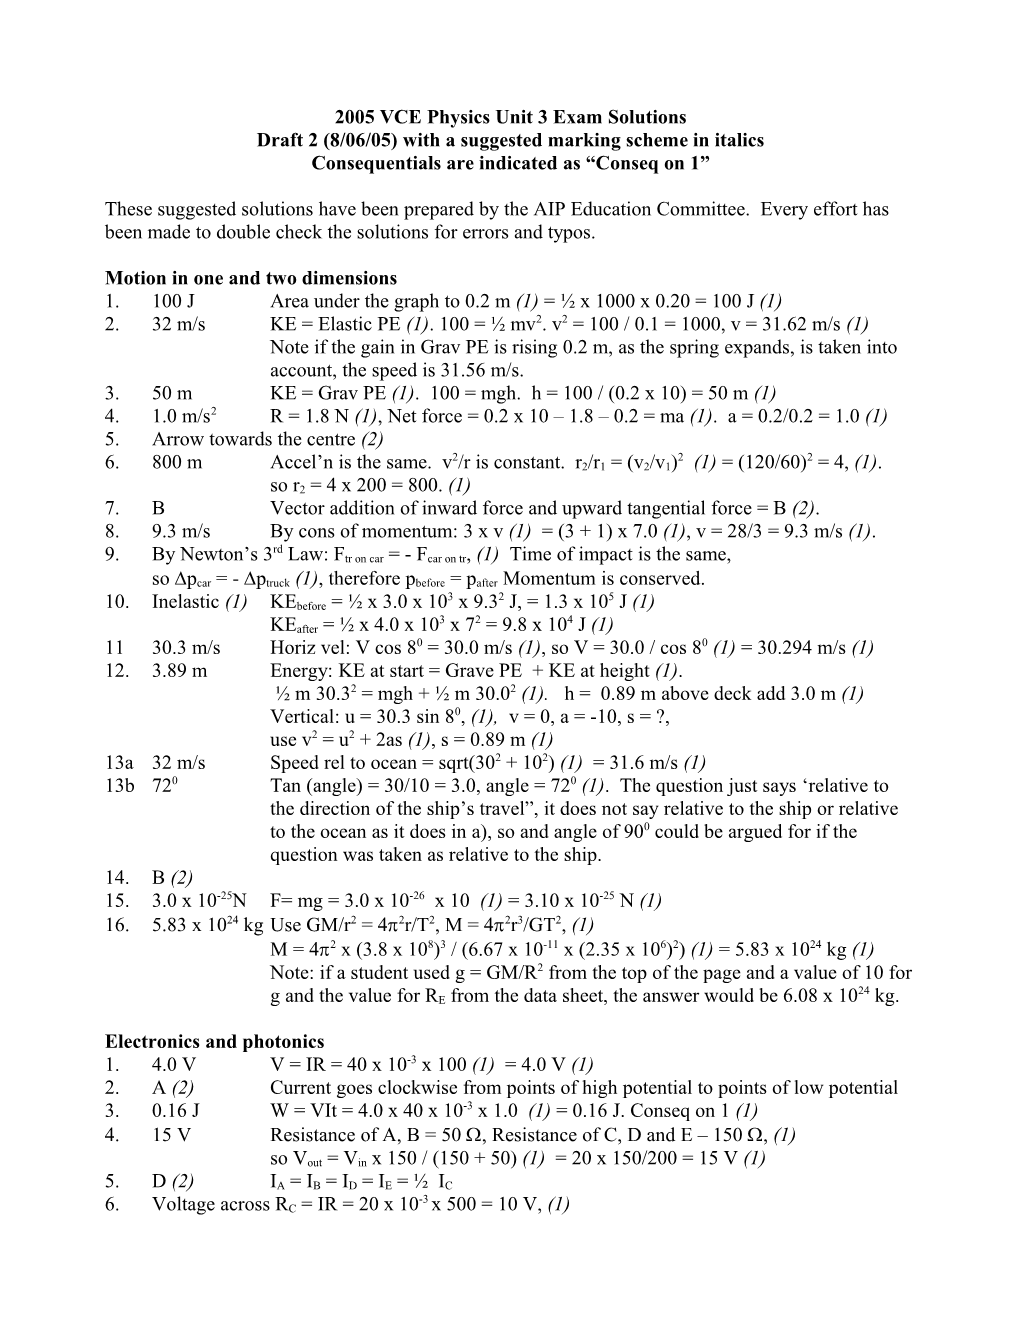 VCE Physics Unit 3 Exam 2005